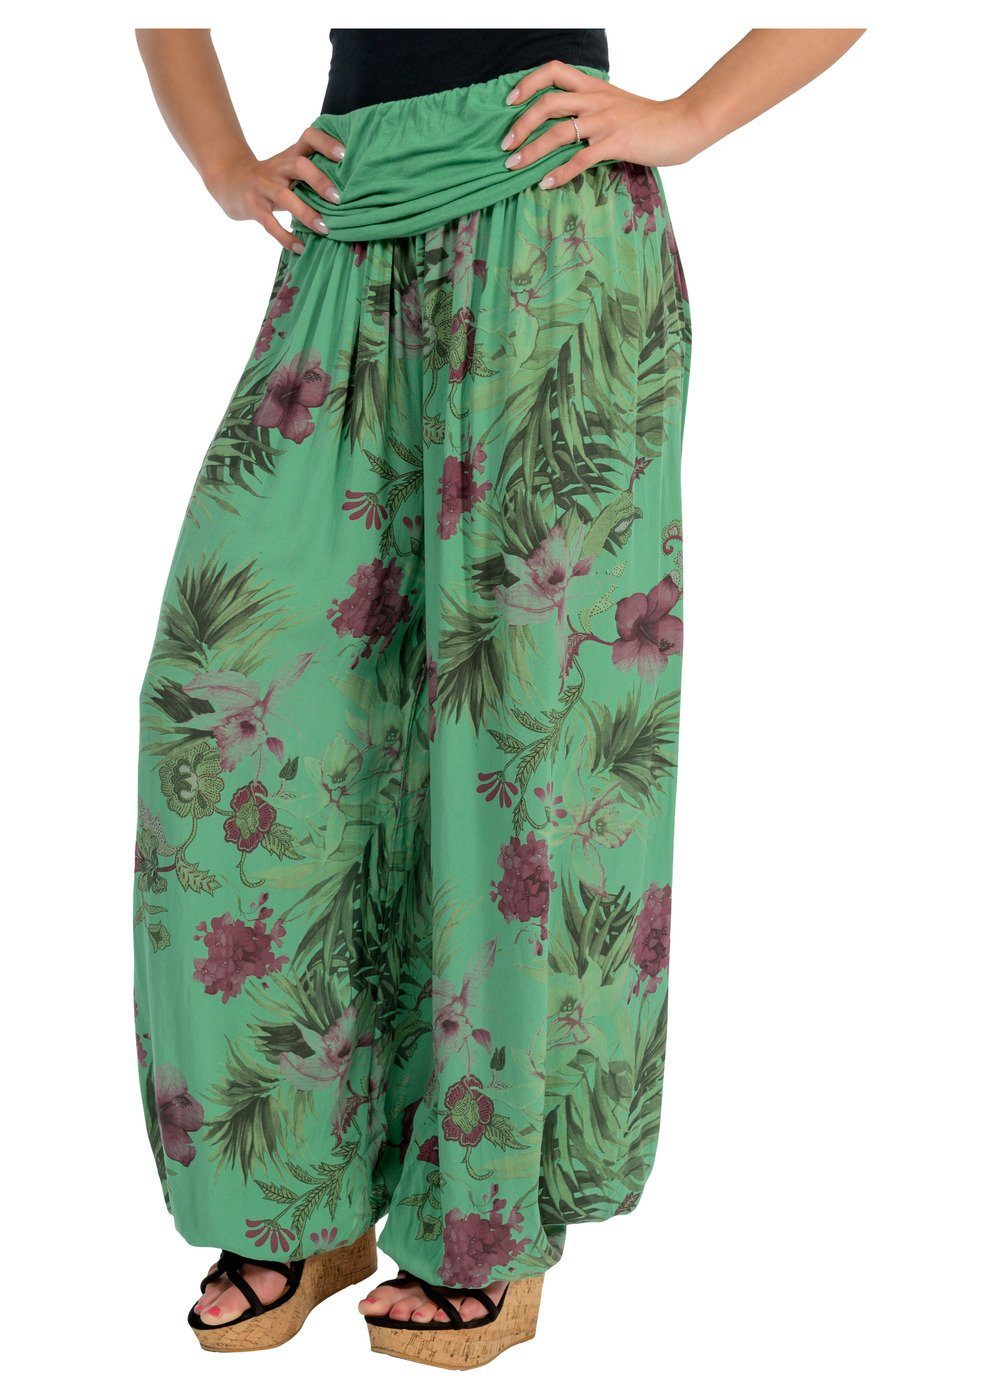 malito more than fashion Haremshose 8939 Aladinhose mit floralem Muster Einheitsgröße grün